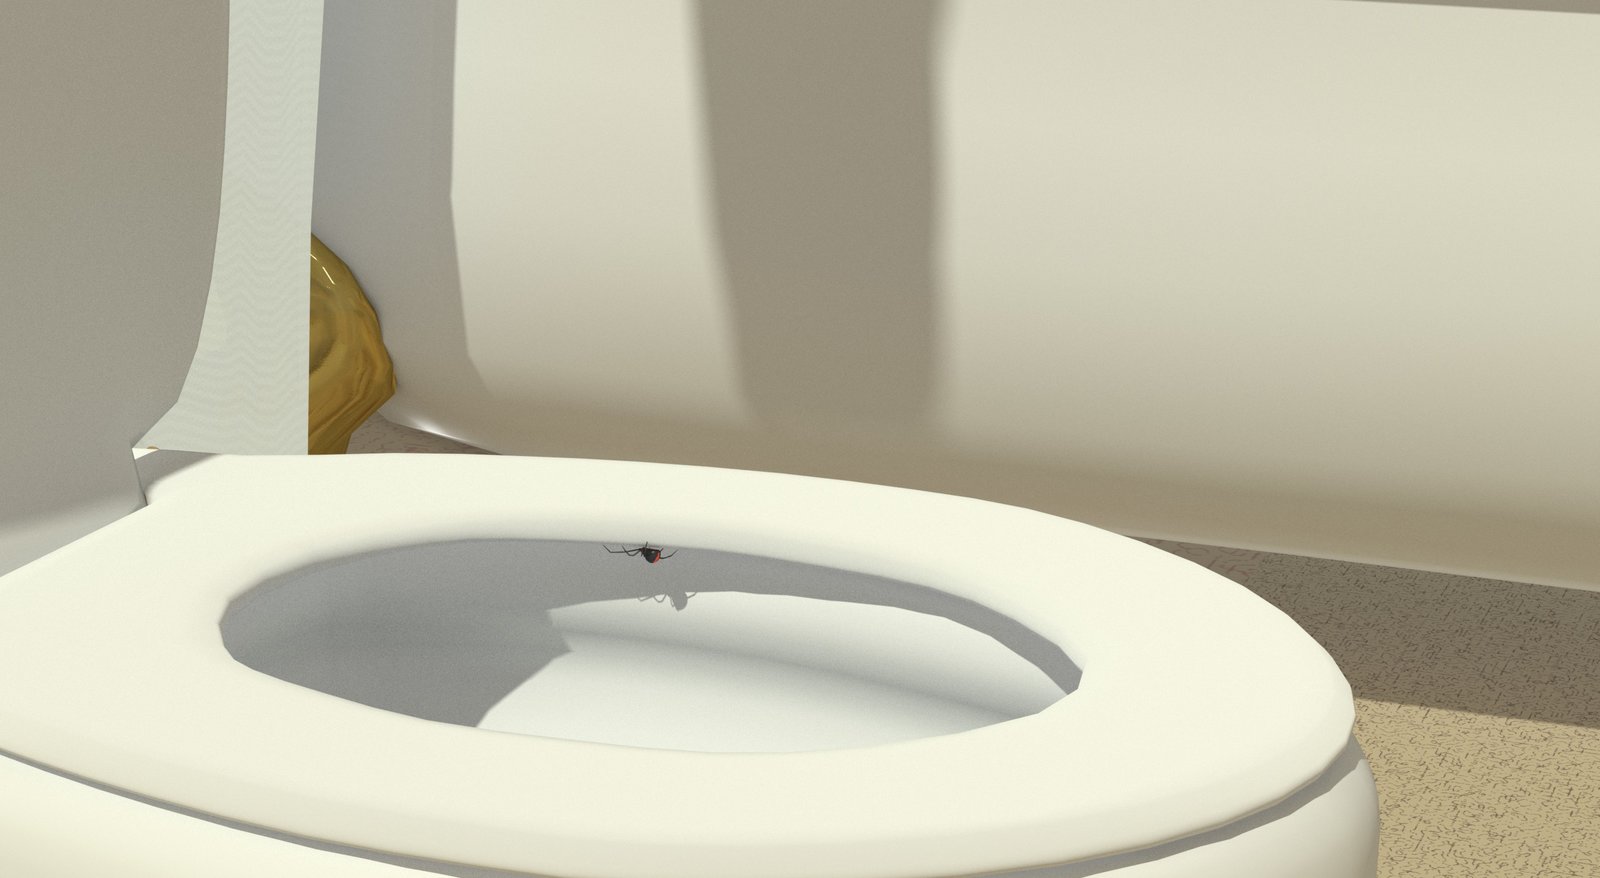 Redback on the toilet seat.jpg